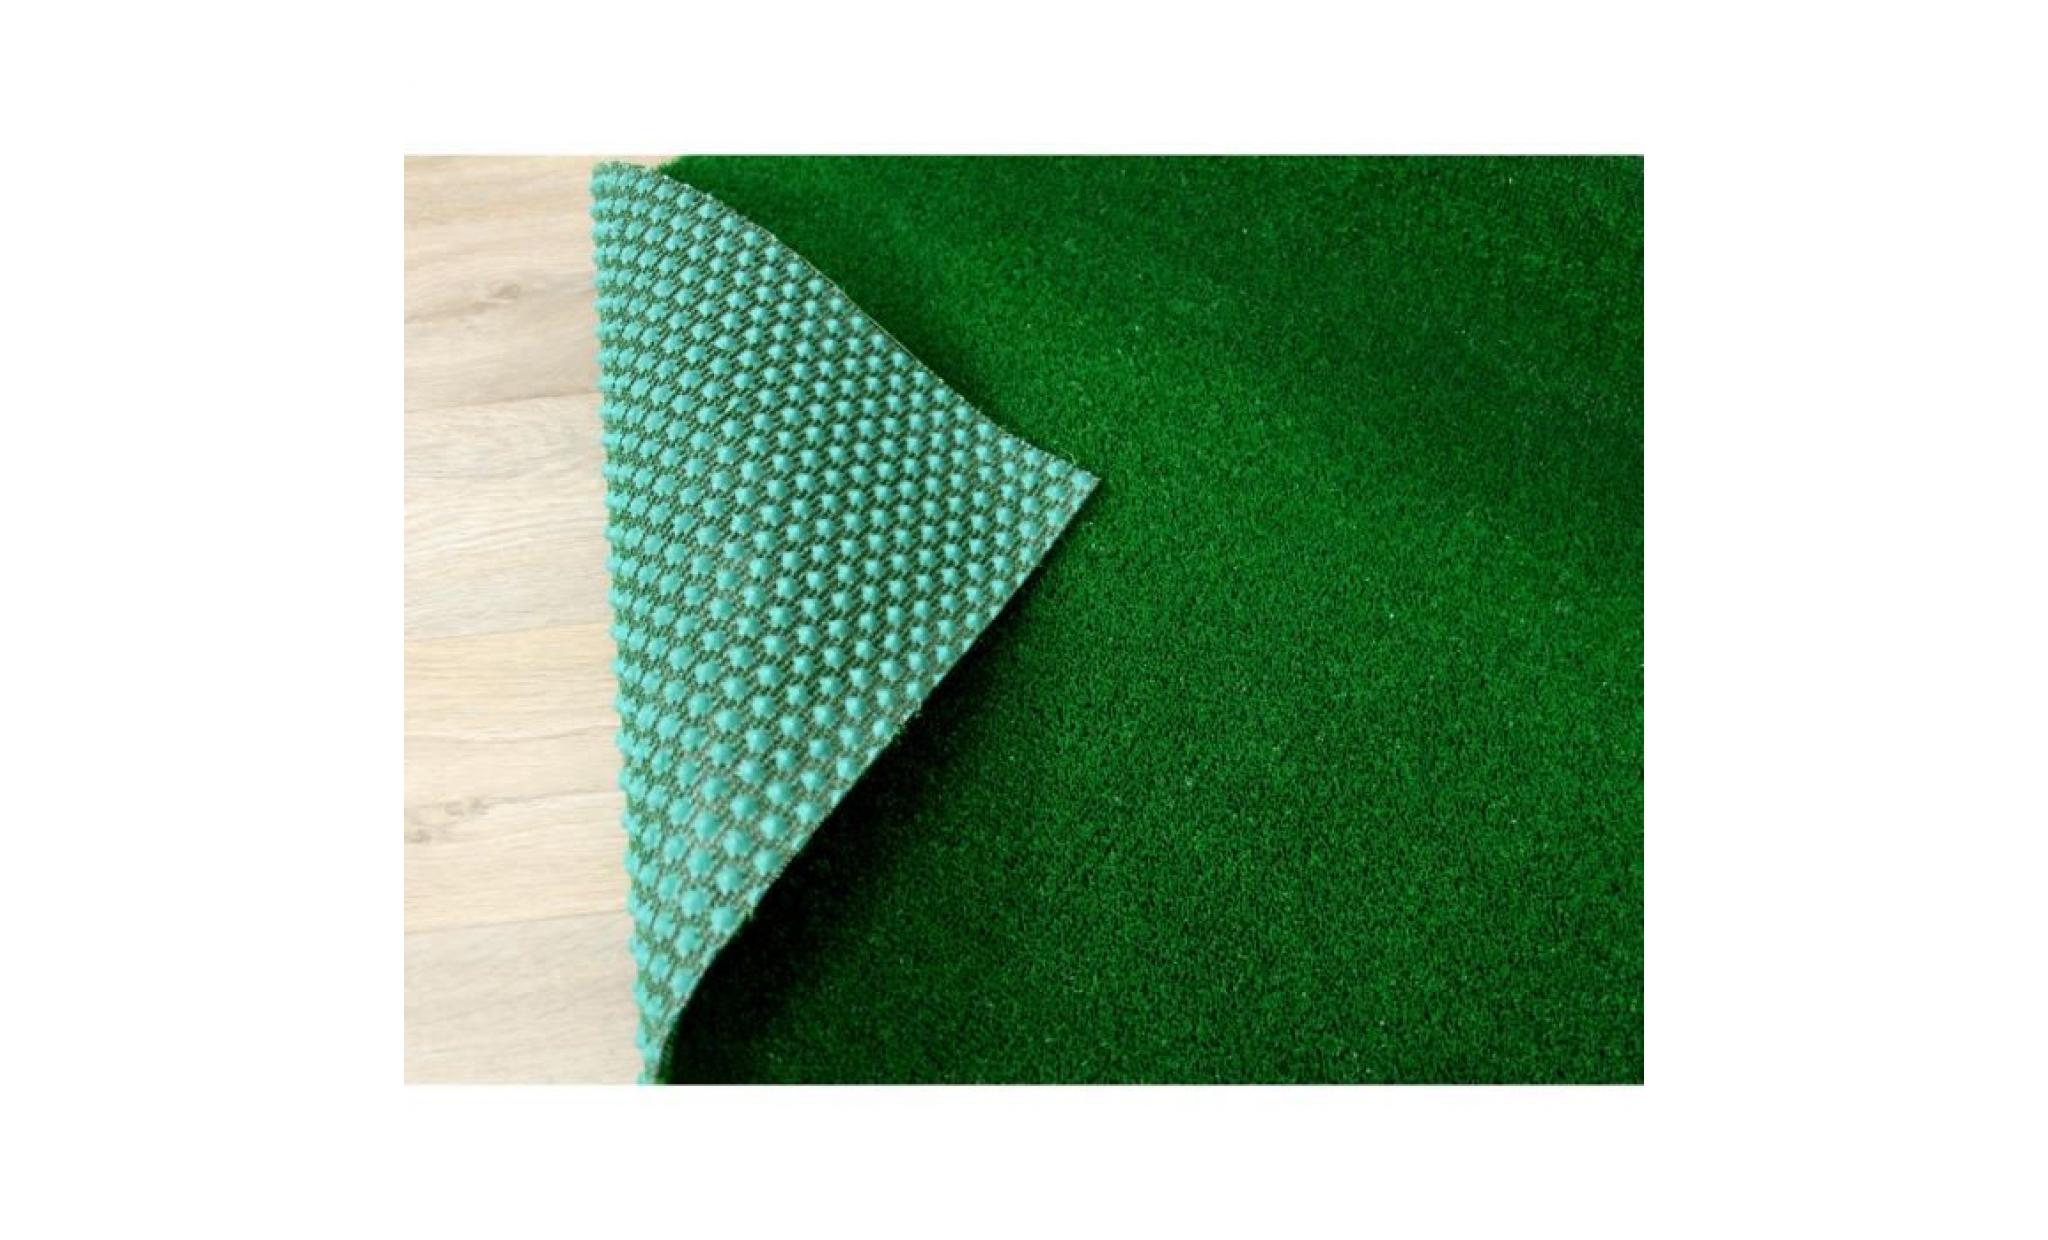 york   tapis type gazon artificiel avec nubs – pour jardin, terrasse, balcon   vert   [200x200 cm] pas cher